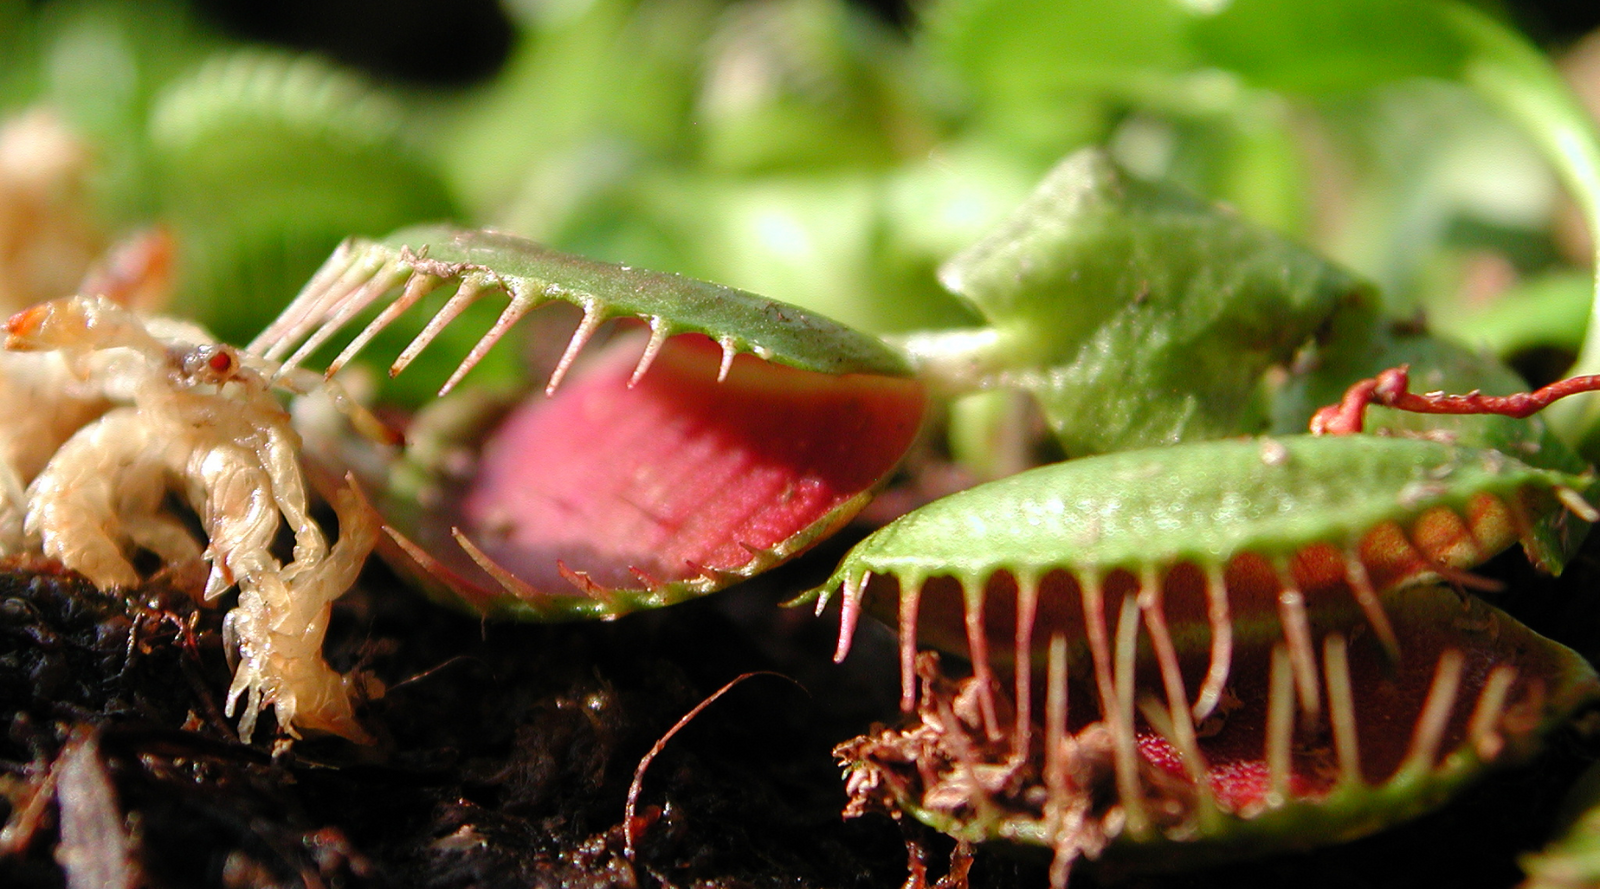 Premium Crickets Horticultural Charcoal For Planted Vivariums